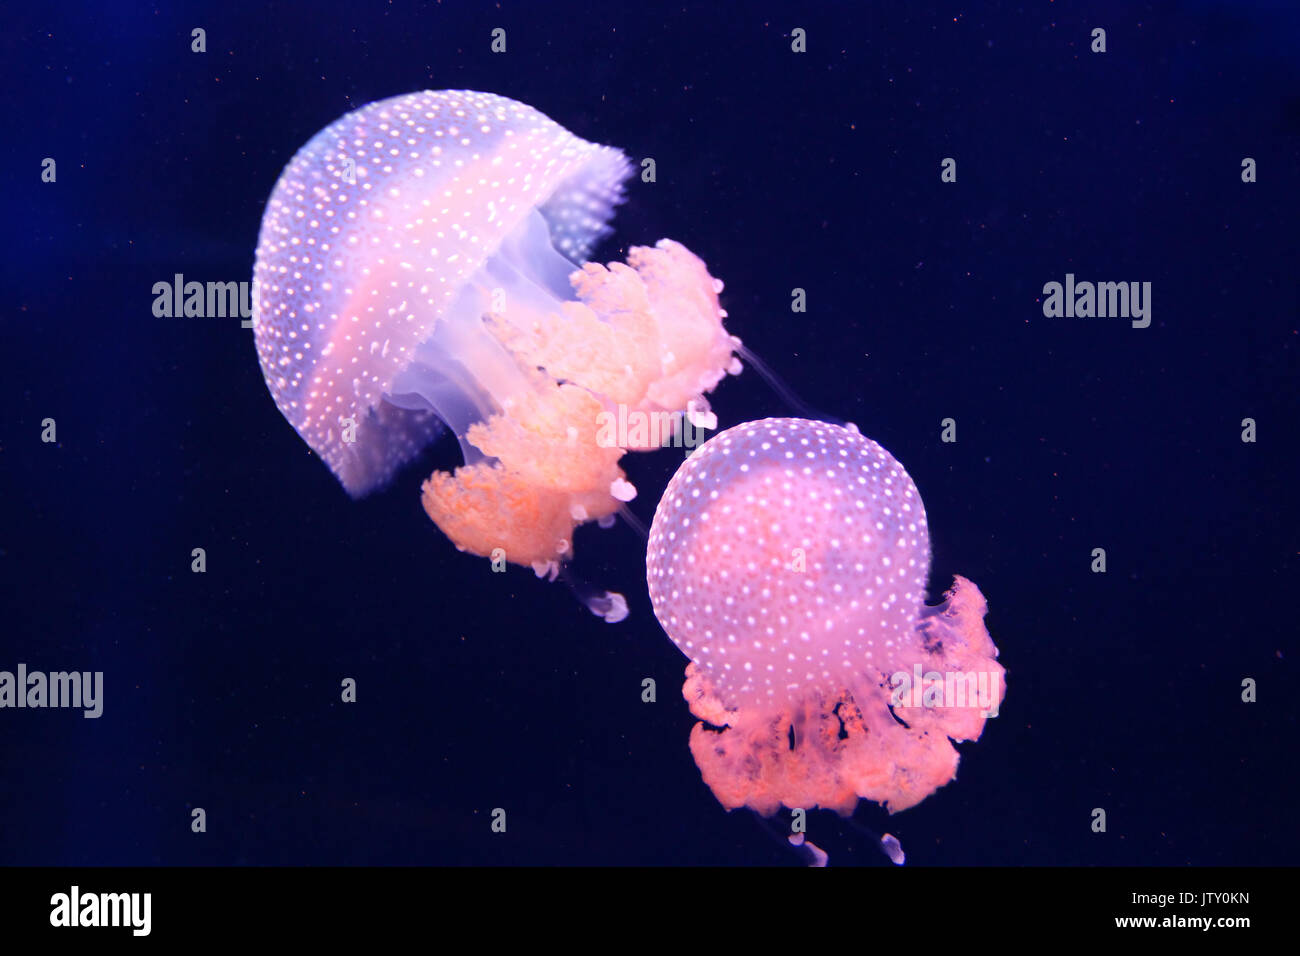 Two pink barrel jellyfish swimming in the dark water Stock Photo